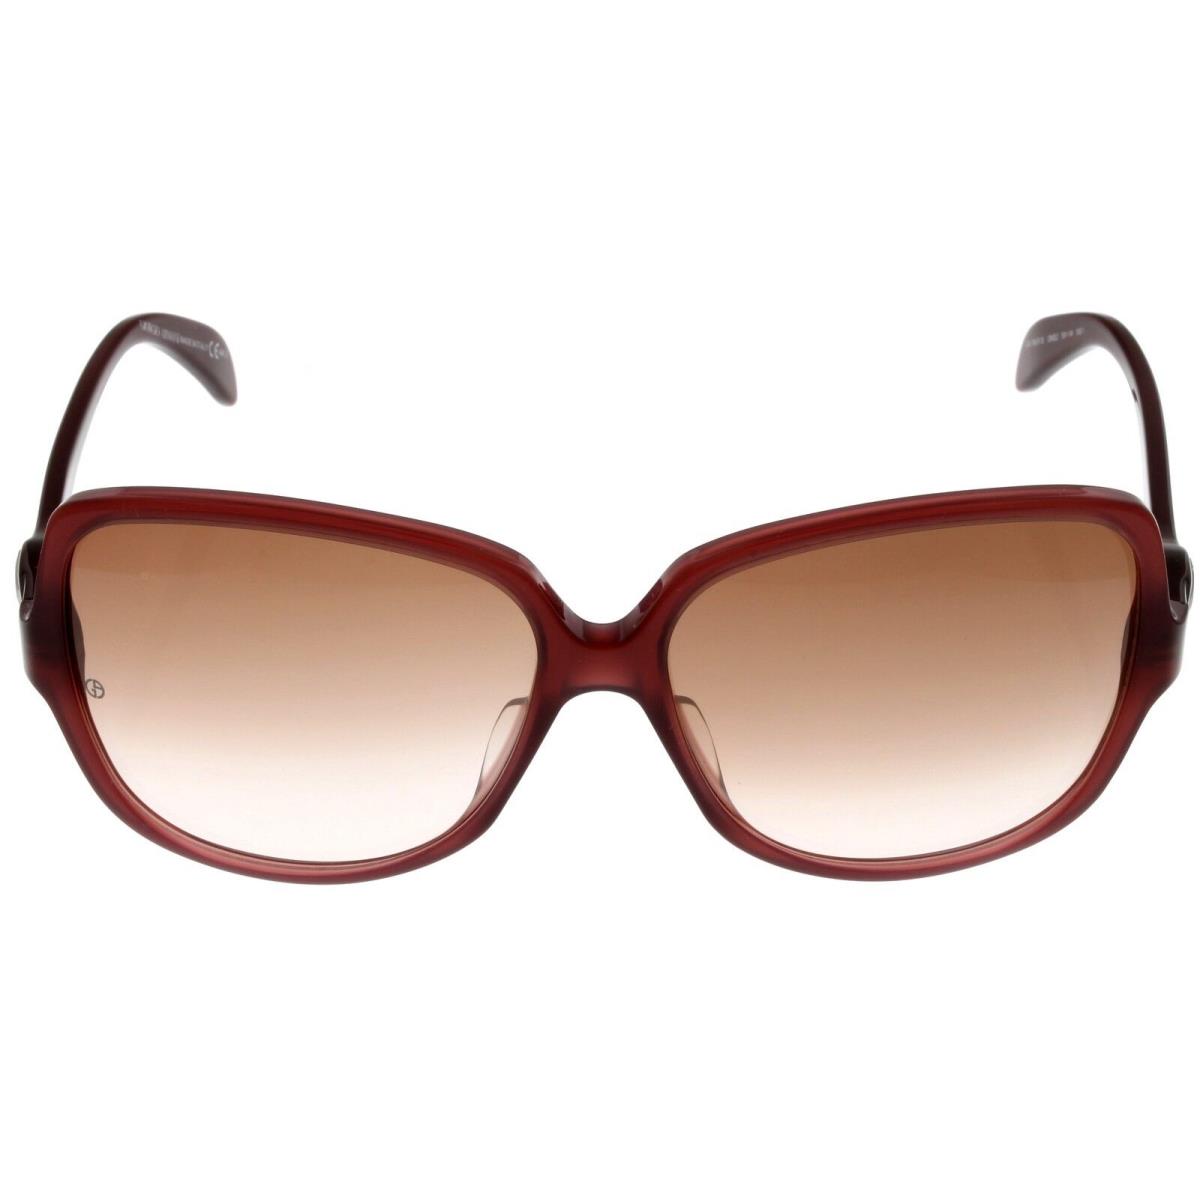 Giorgio Armani Sunglasses Women GA756 I3N Plum Red Square